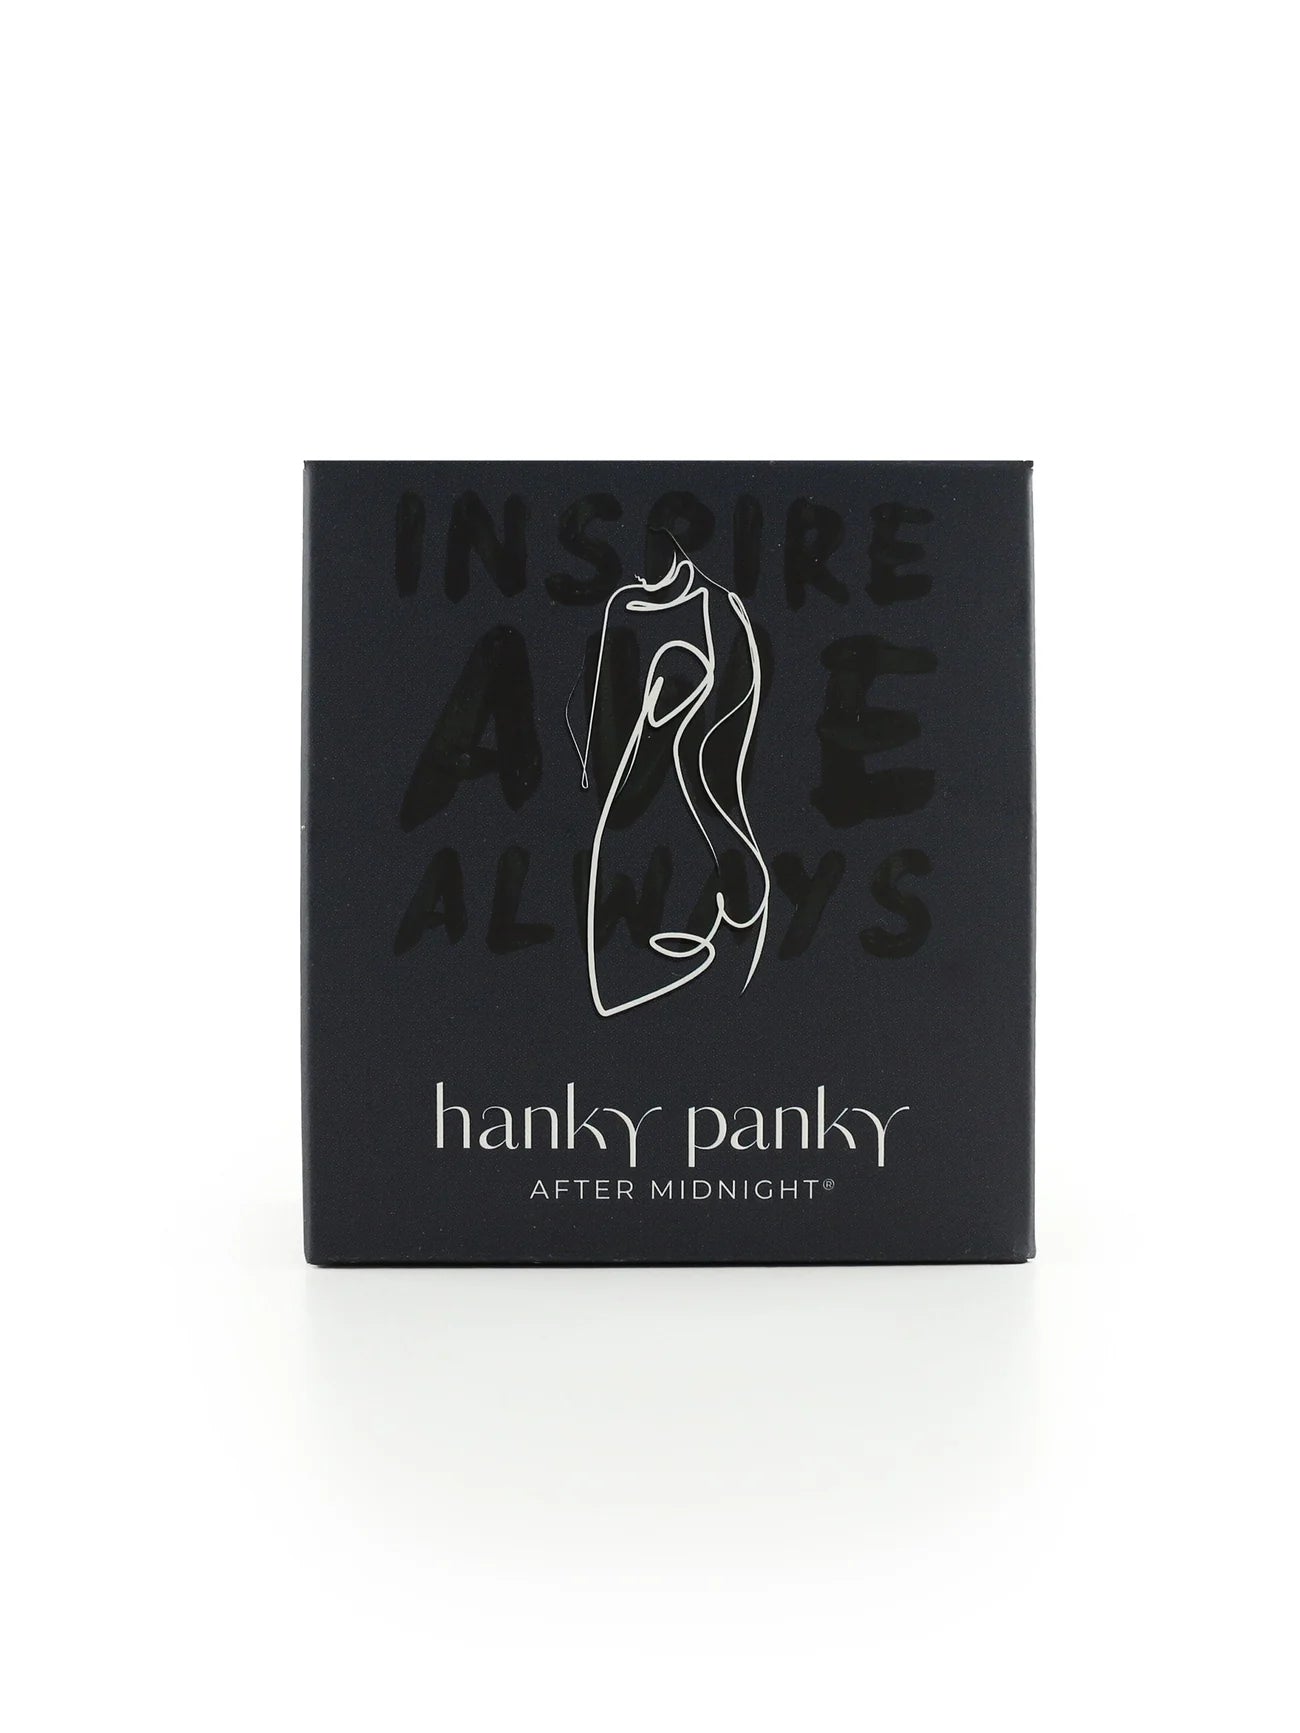 Hanky Panky "Naughty & Nice" Boxed Set - 0